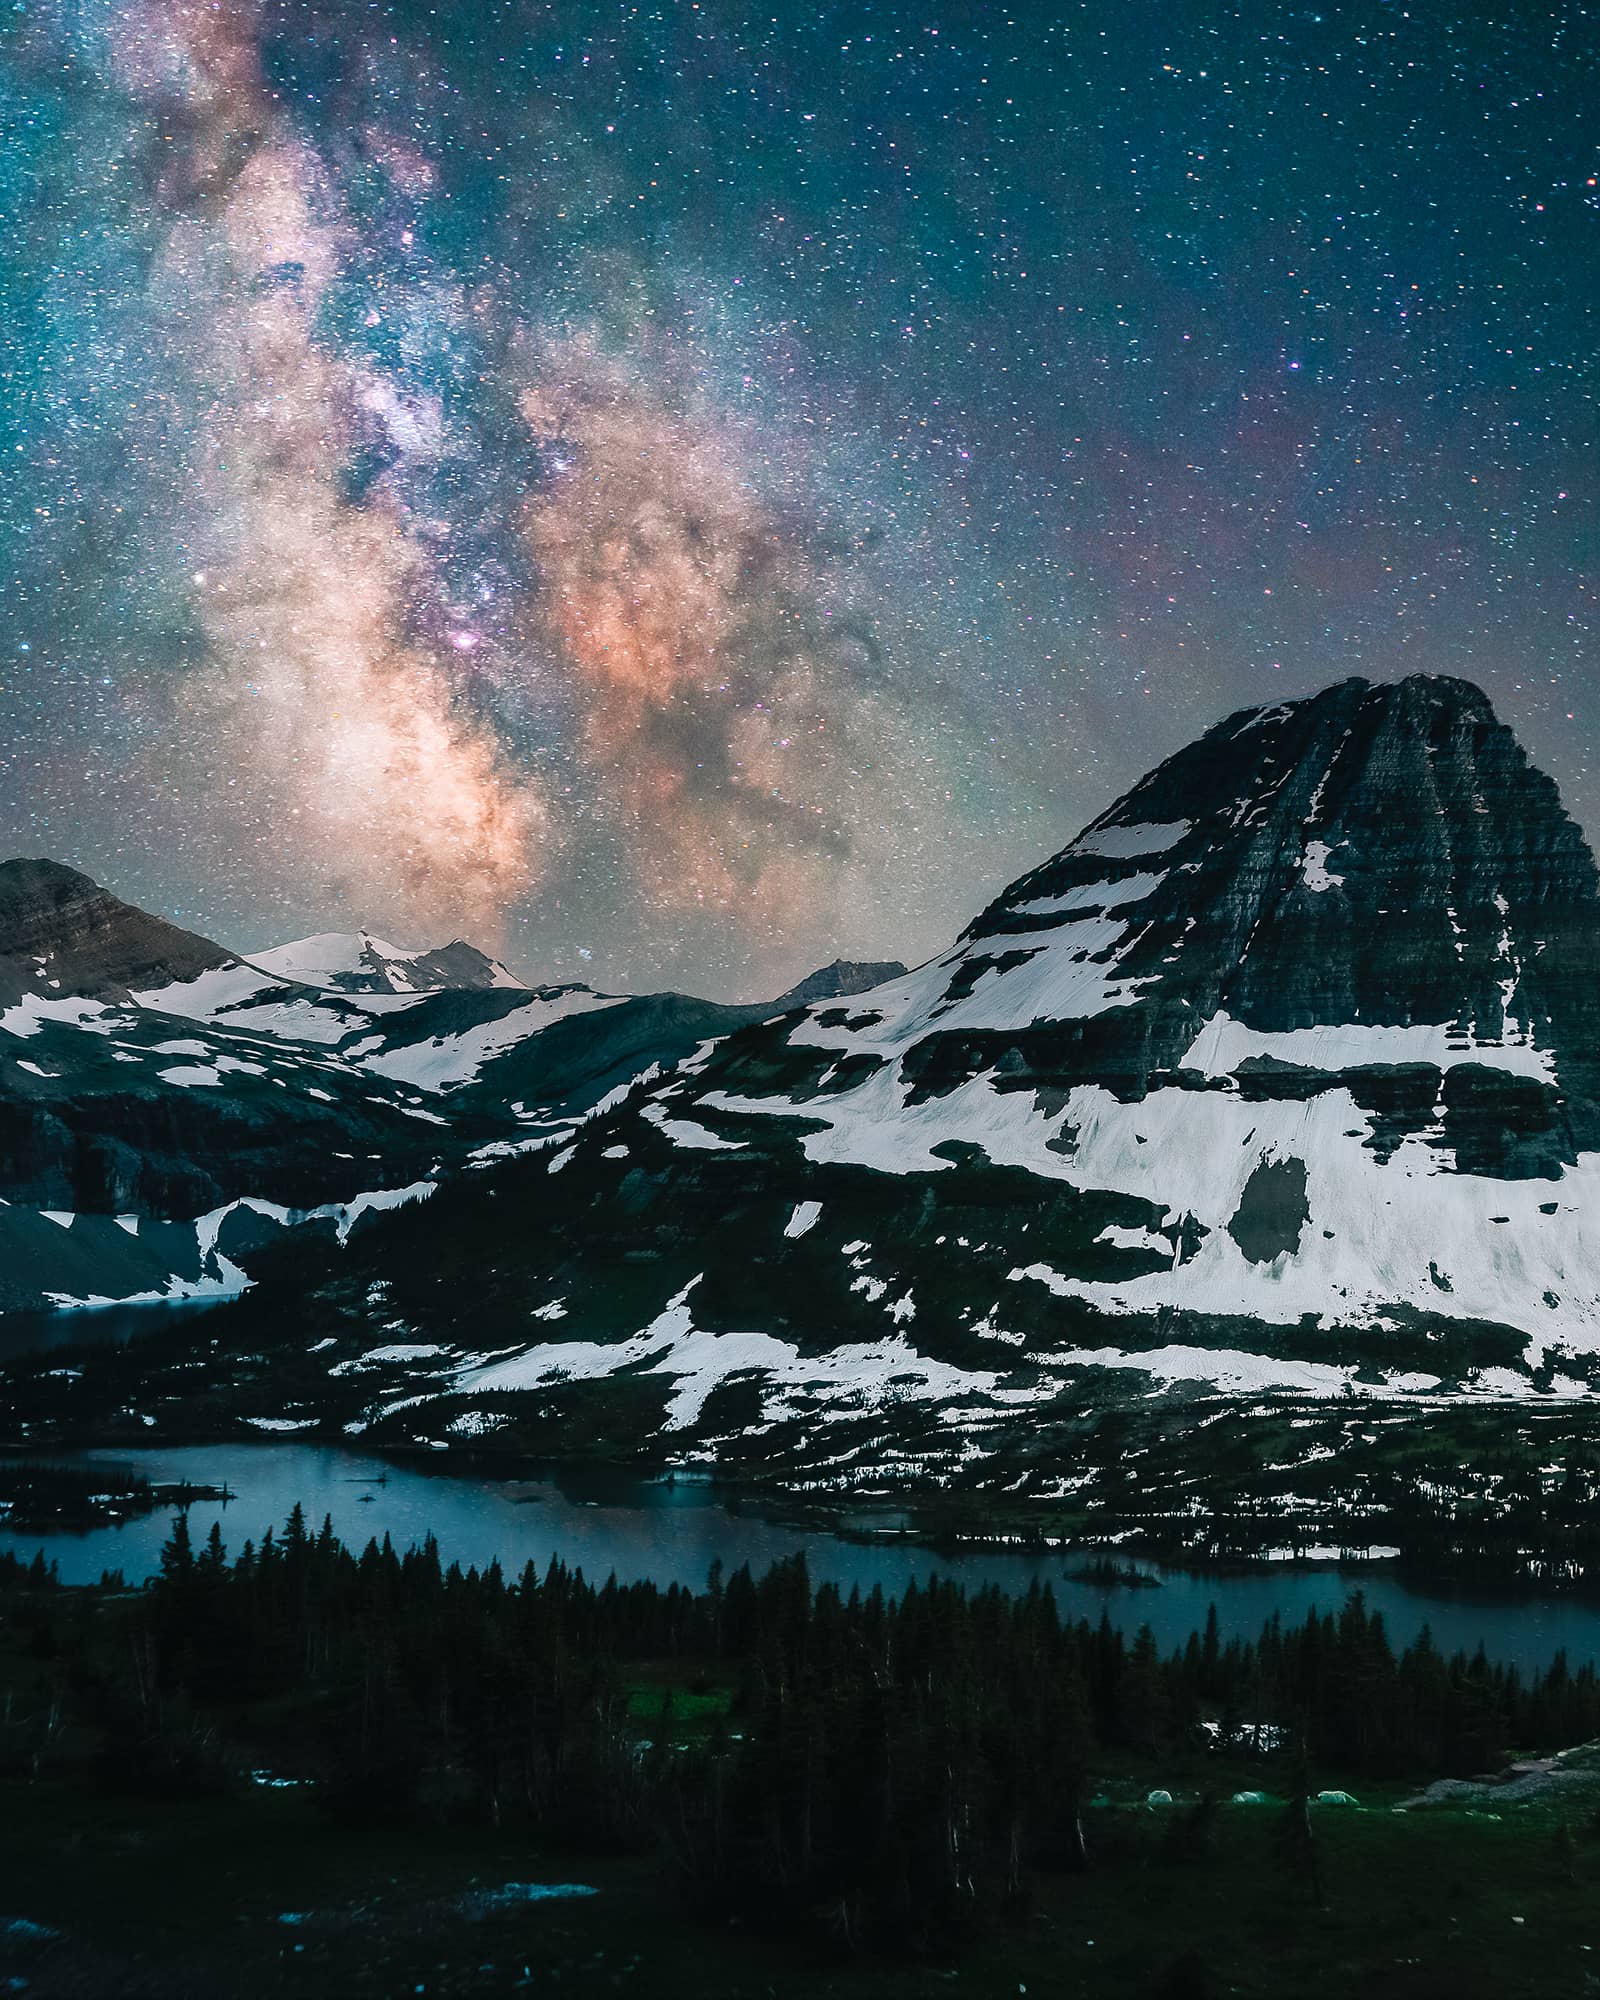 Hidden lake with galaxy stars